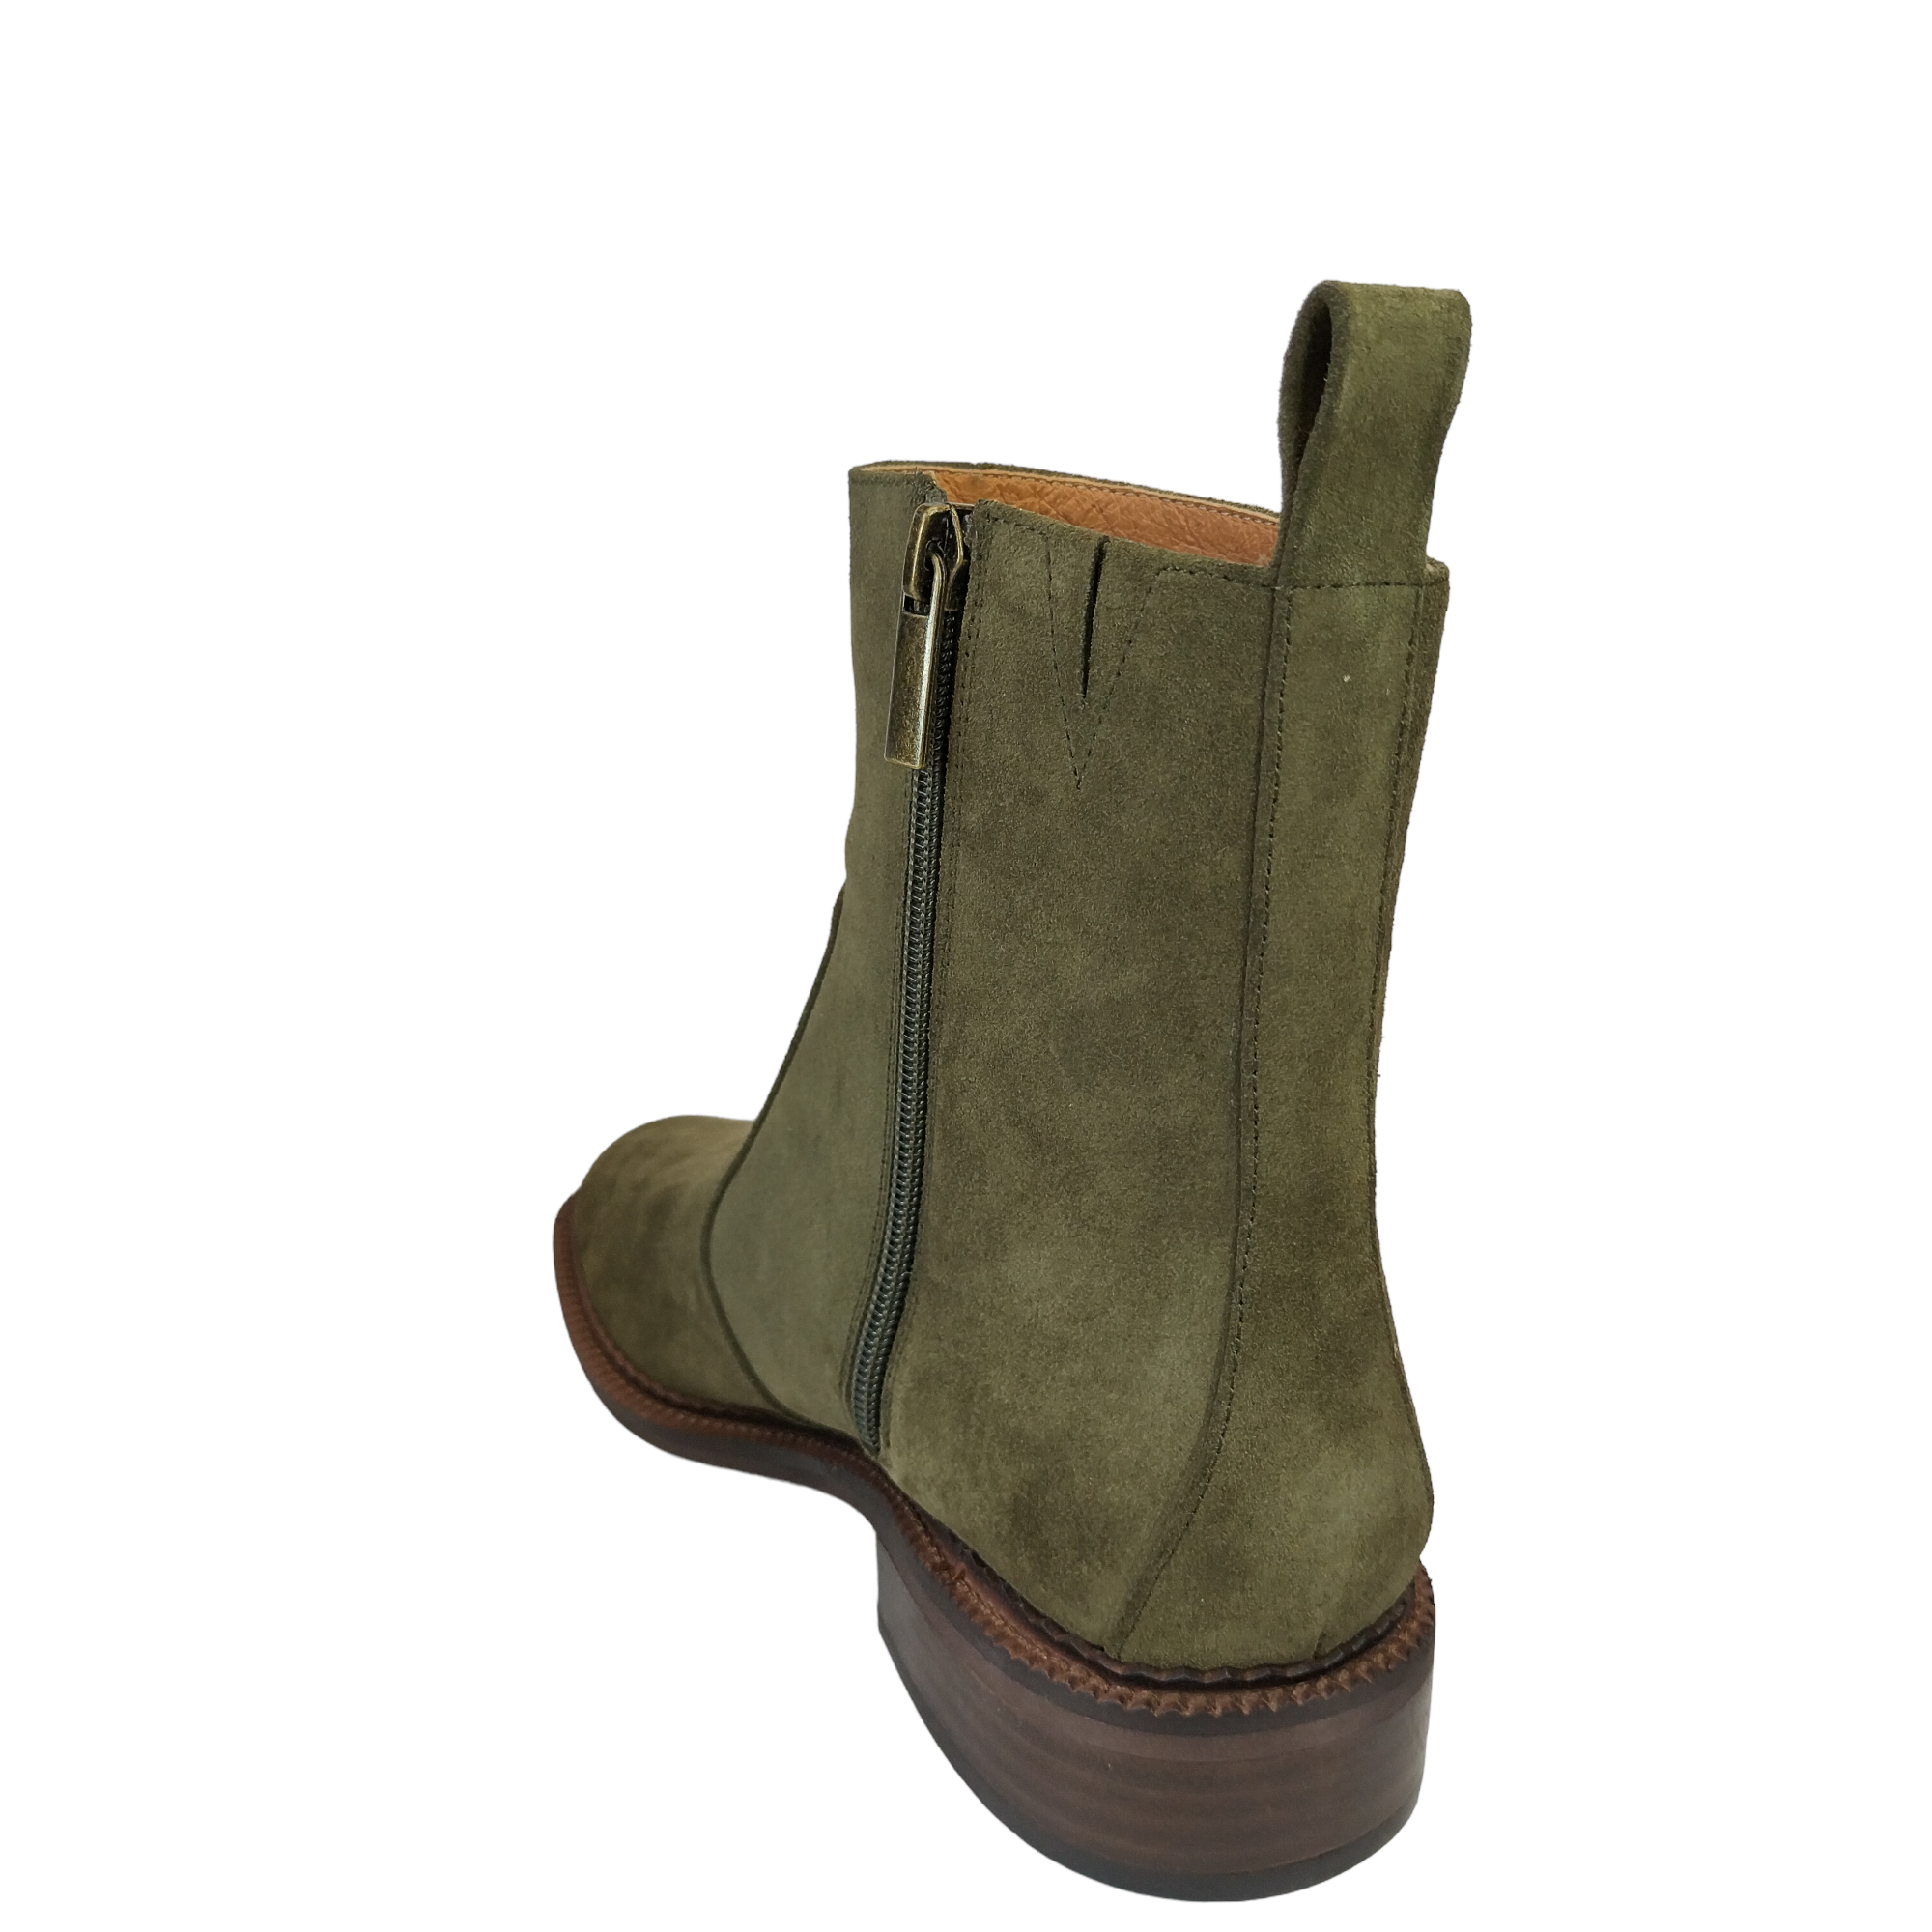 Karina - shoe&amp;me - EOS - Boot - Boots, Winter, Womens